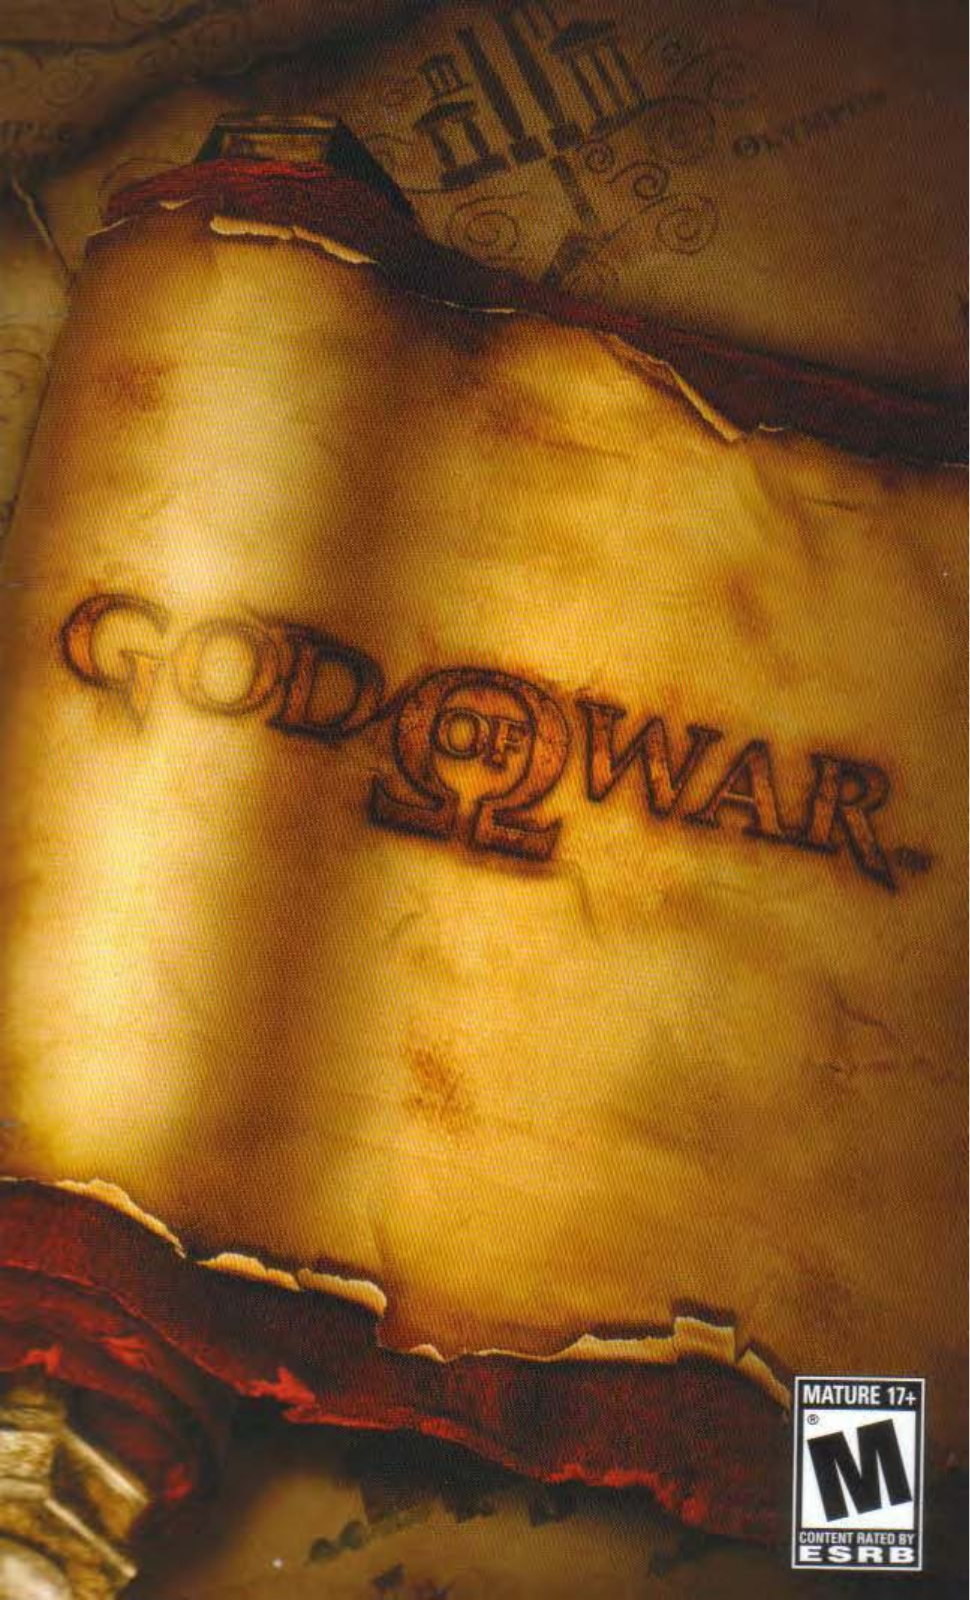 Games PS2 GOD OF WAR User Manual